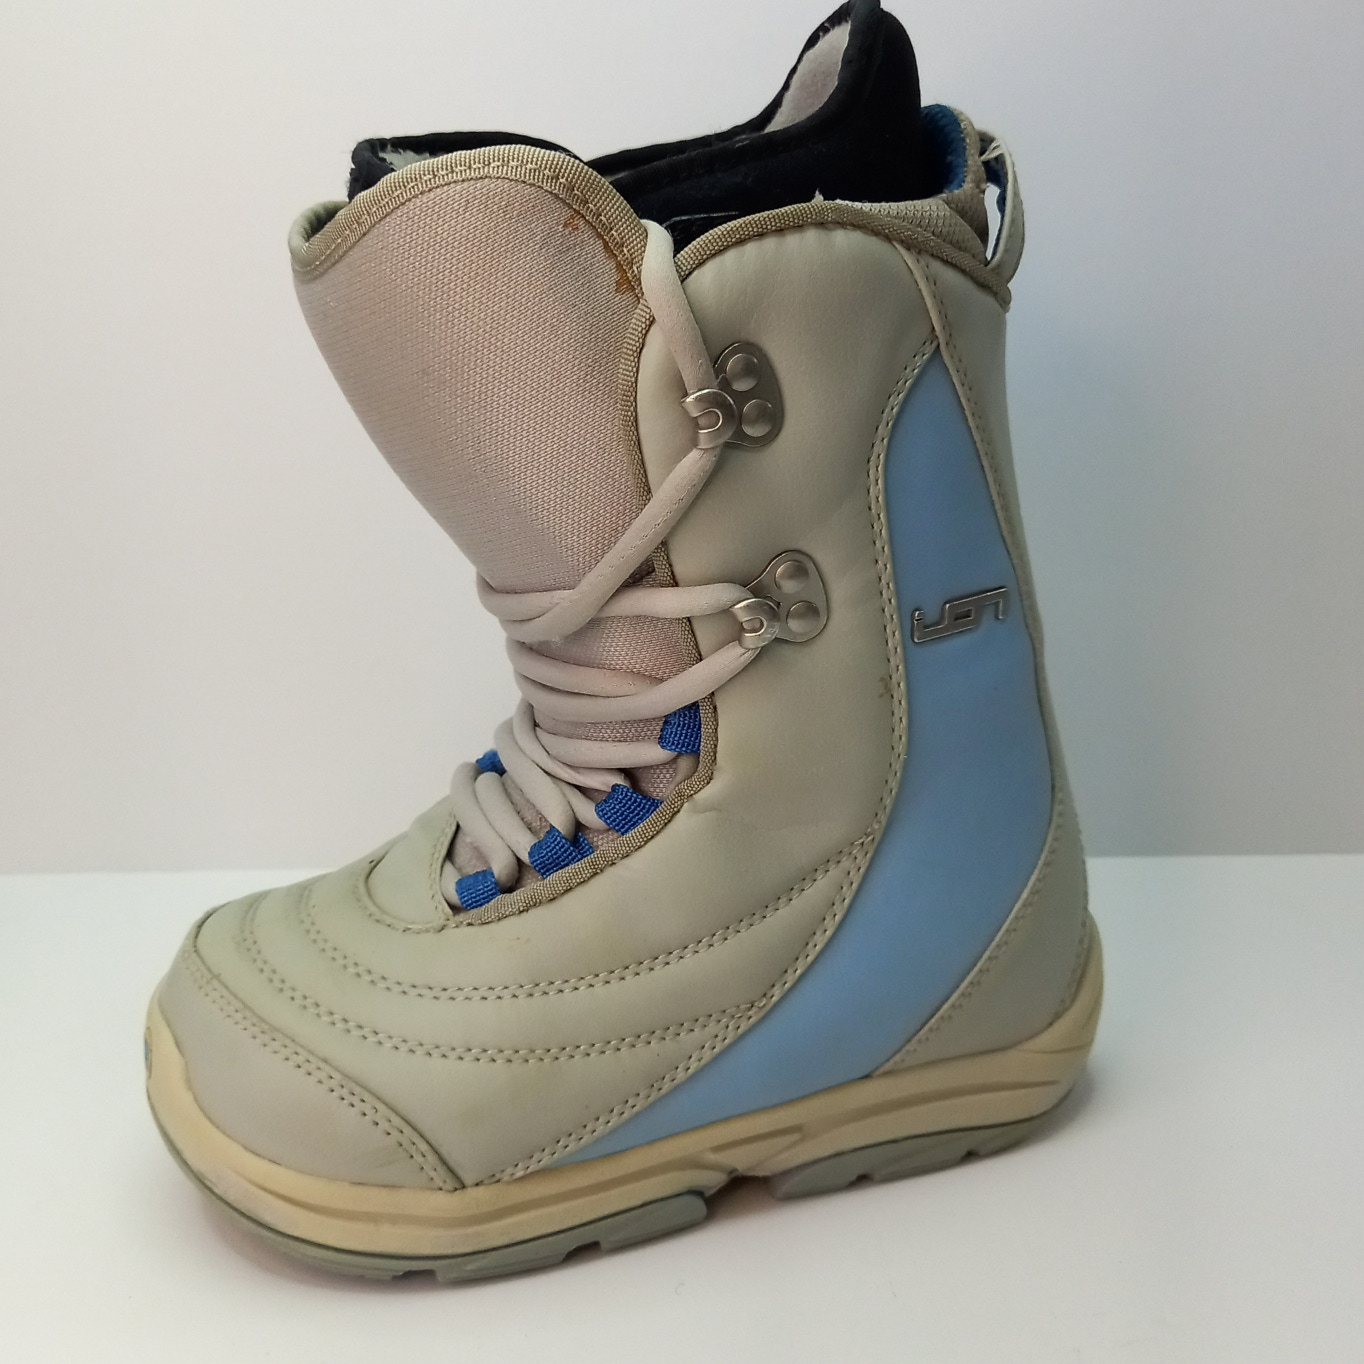 Used Size 3.0 (Women's 4.0) Burton ION Grom Imprint 2 Snowboard Boots